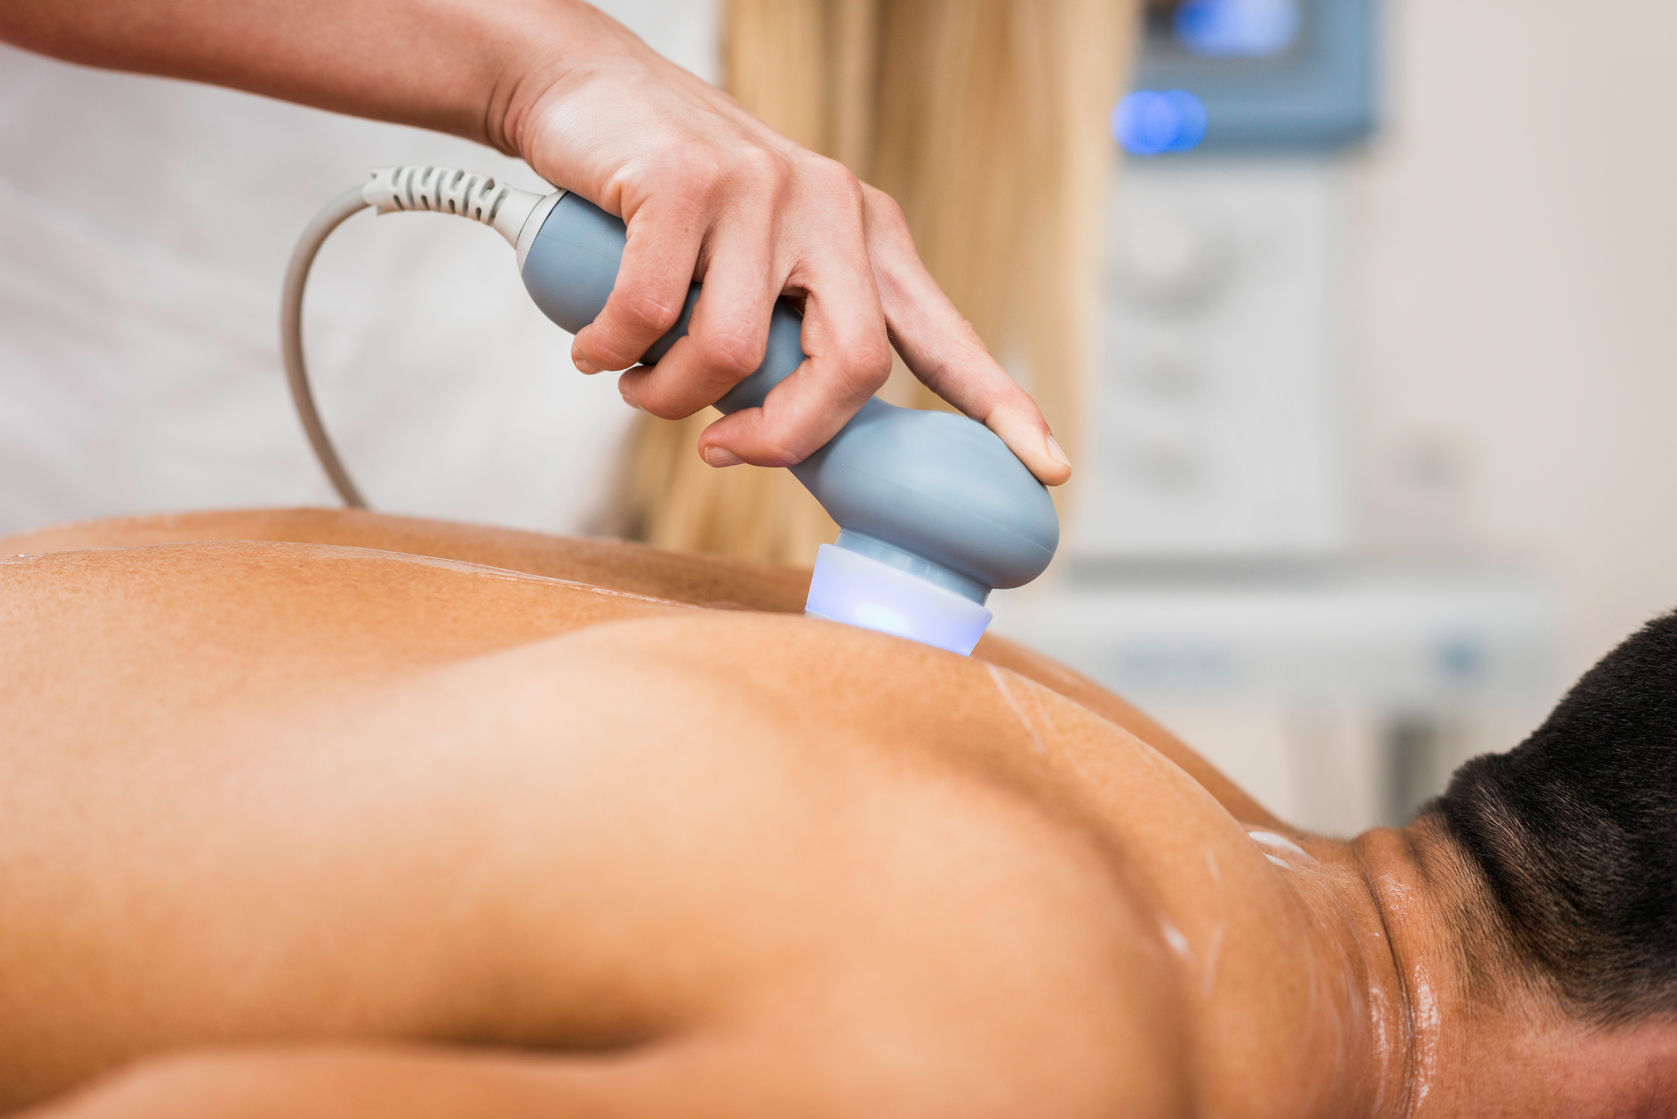 Ultrasound and Stimulation Therapy